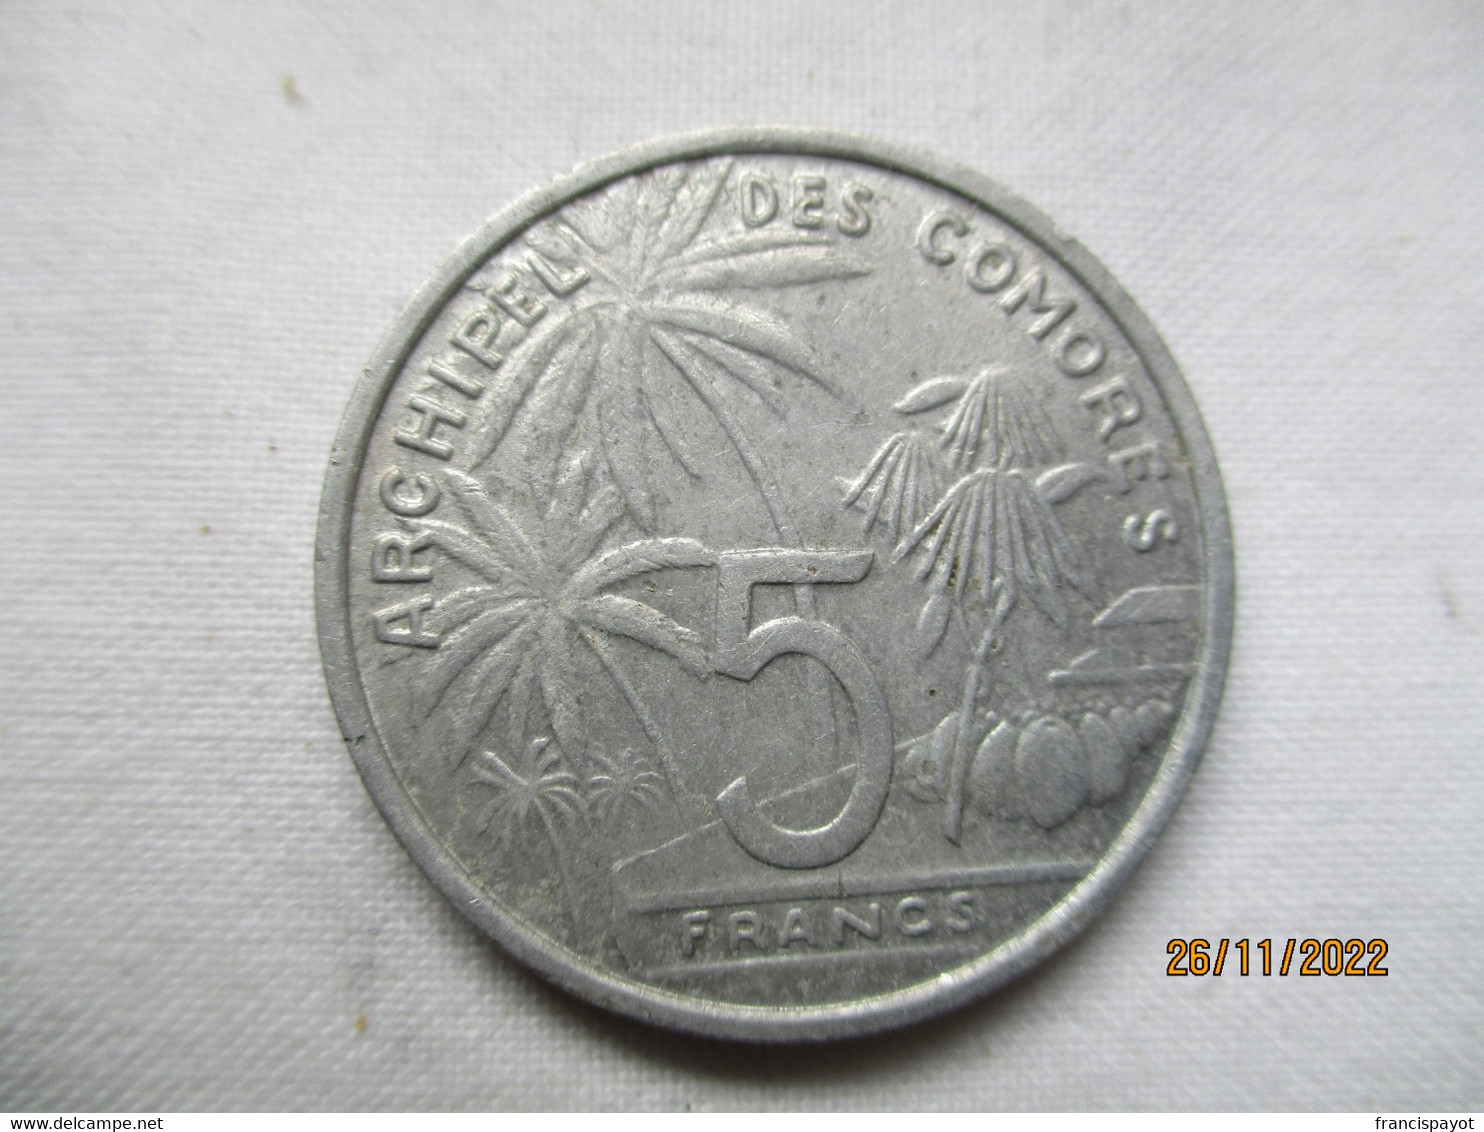 Comoros: 5 Francs 1964 - Comoros